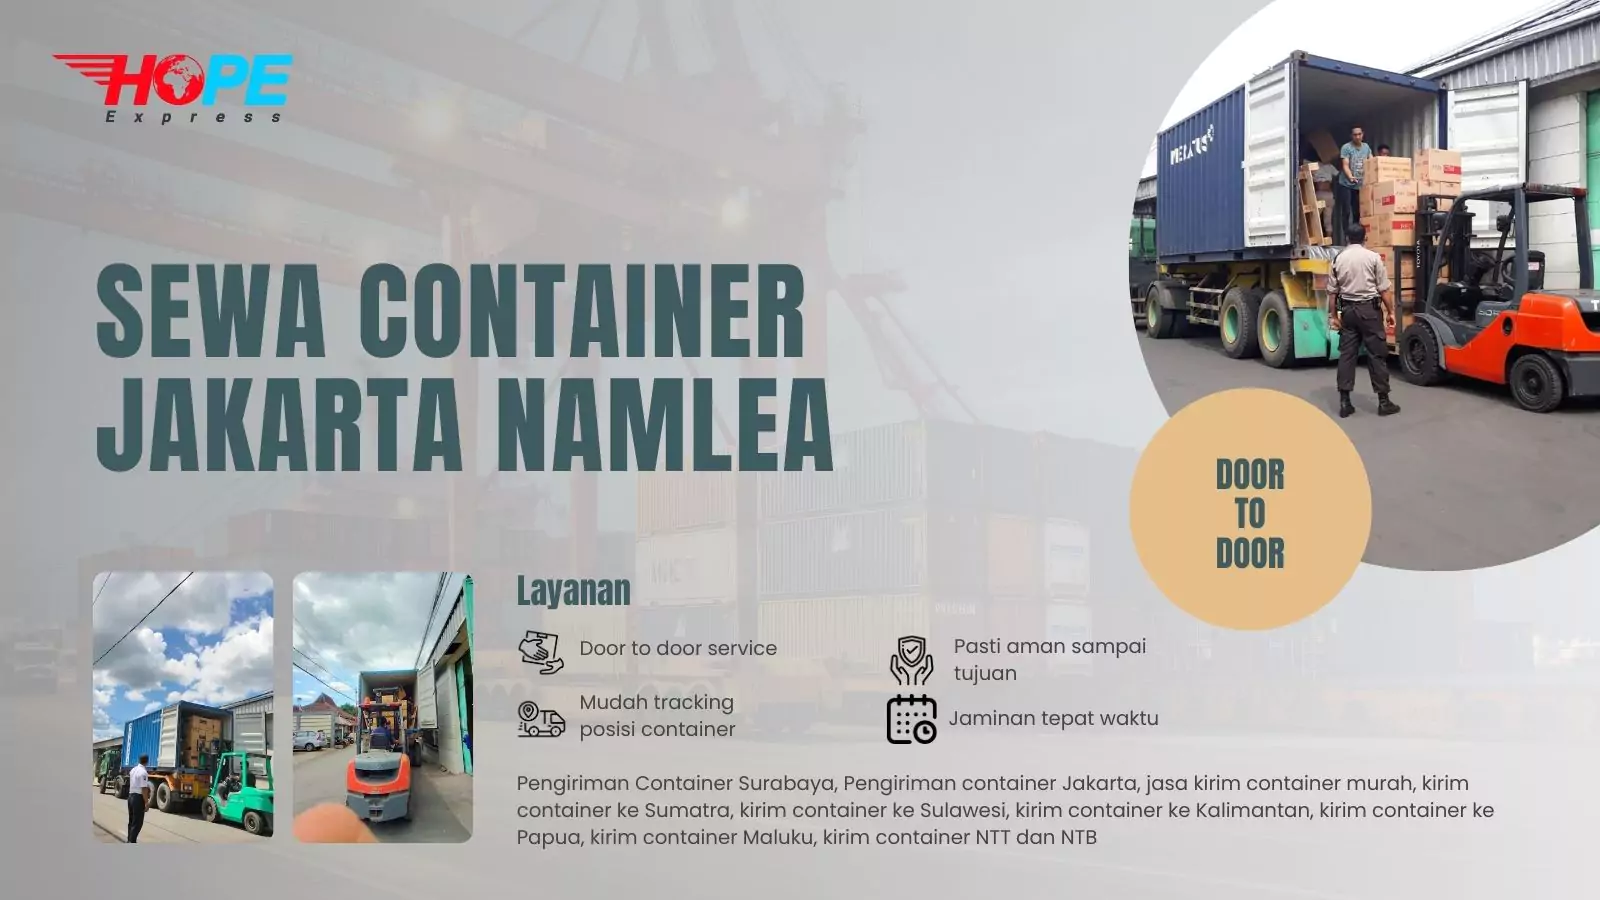 Sewa Container Jakarta Namlea